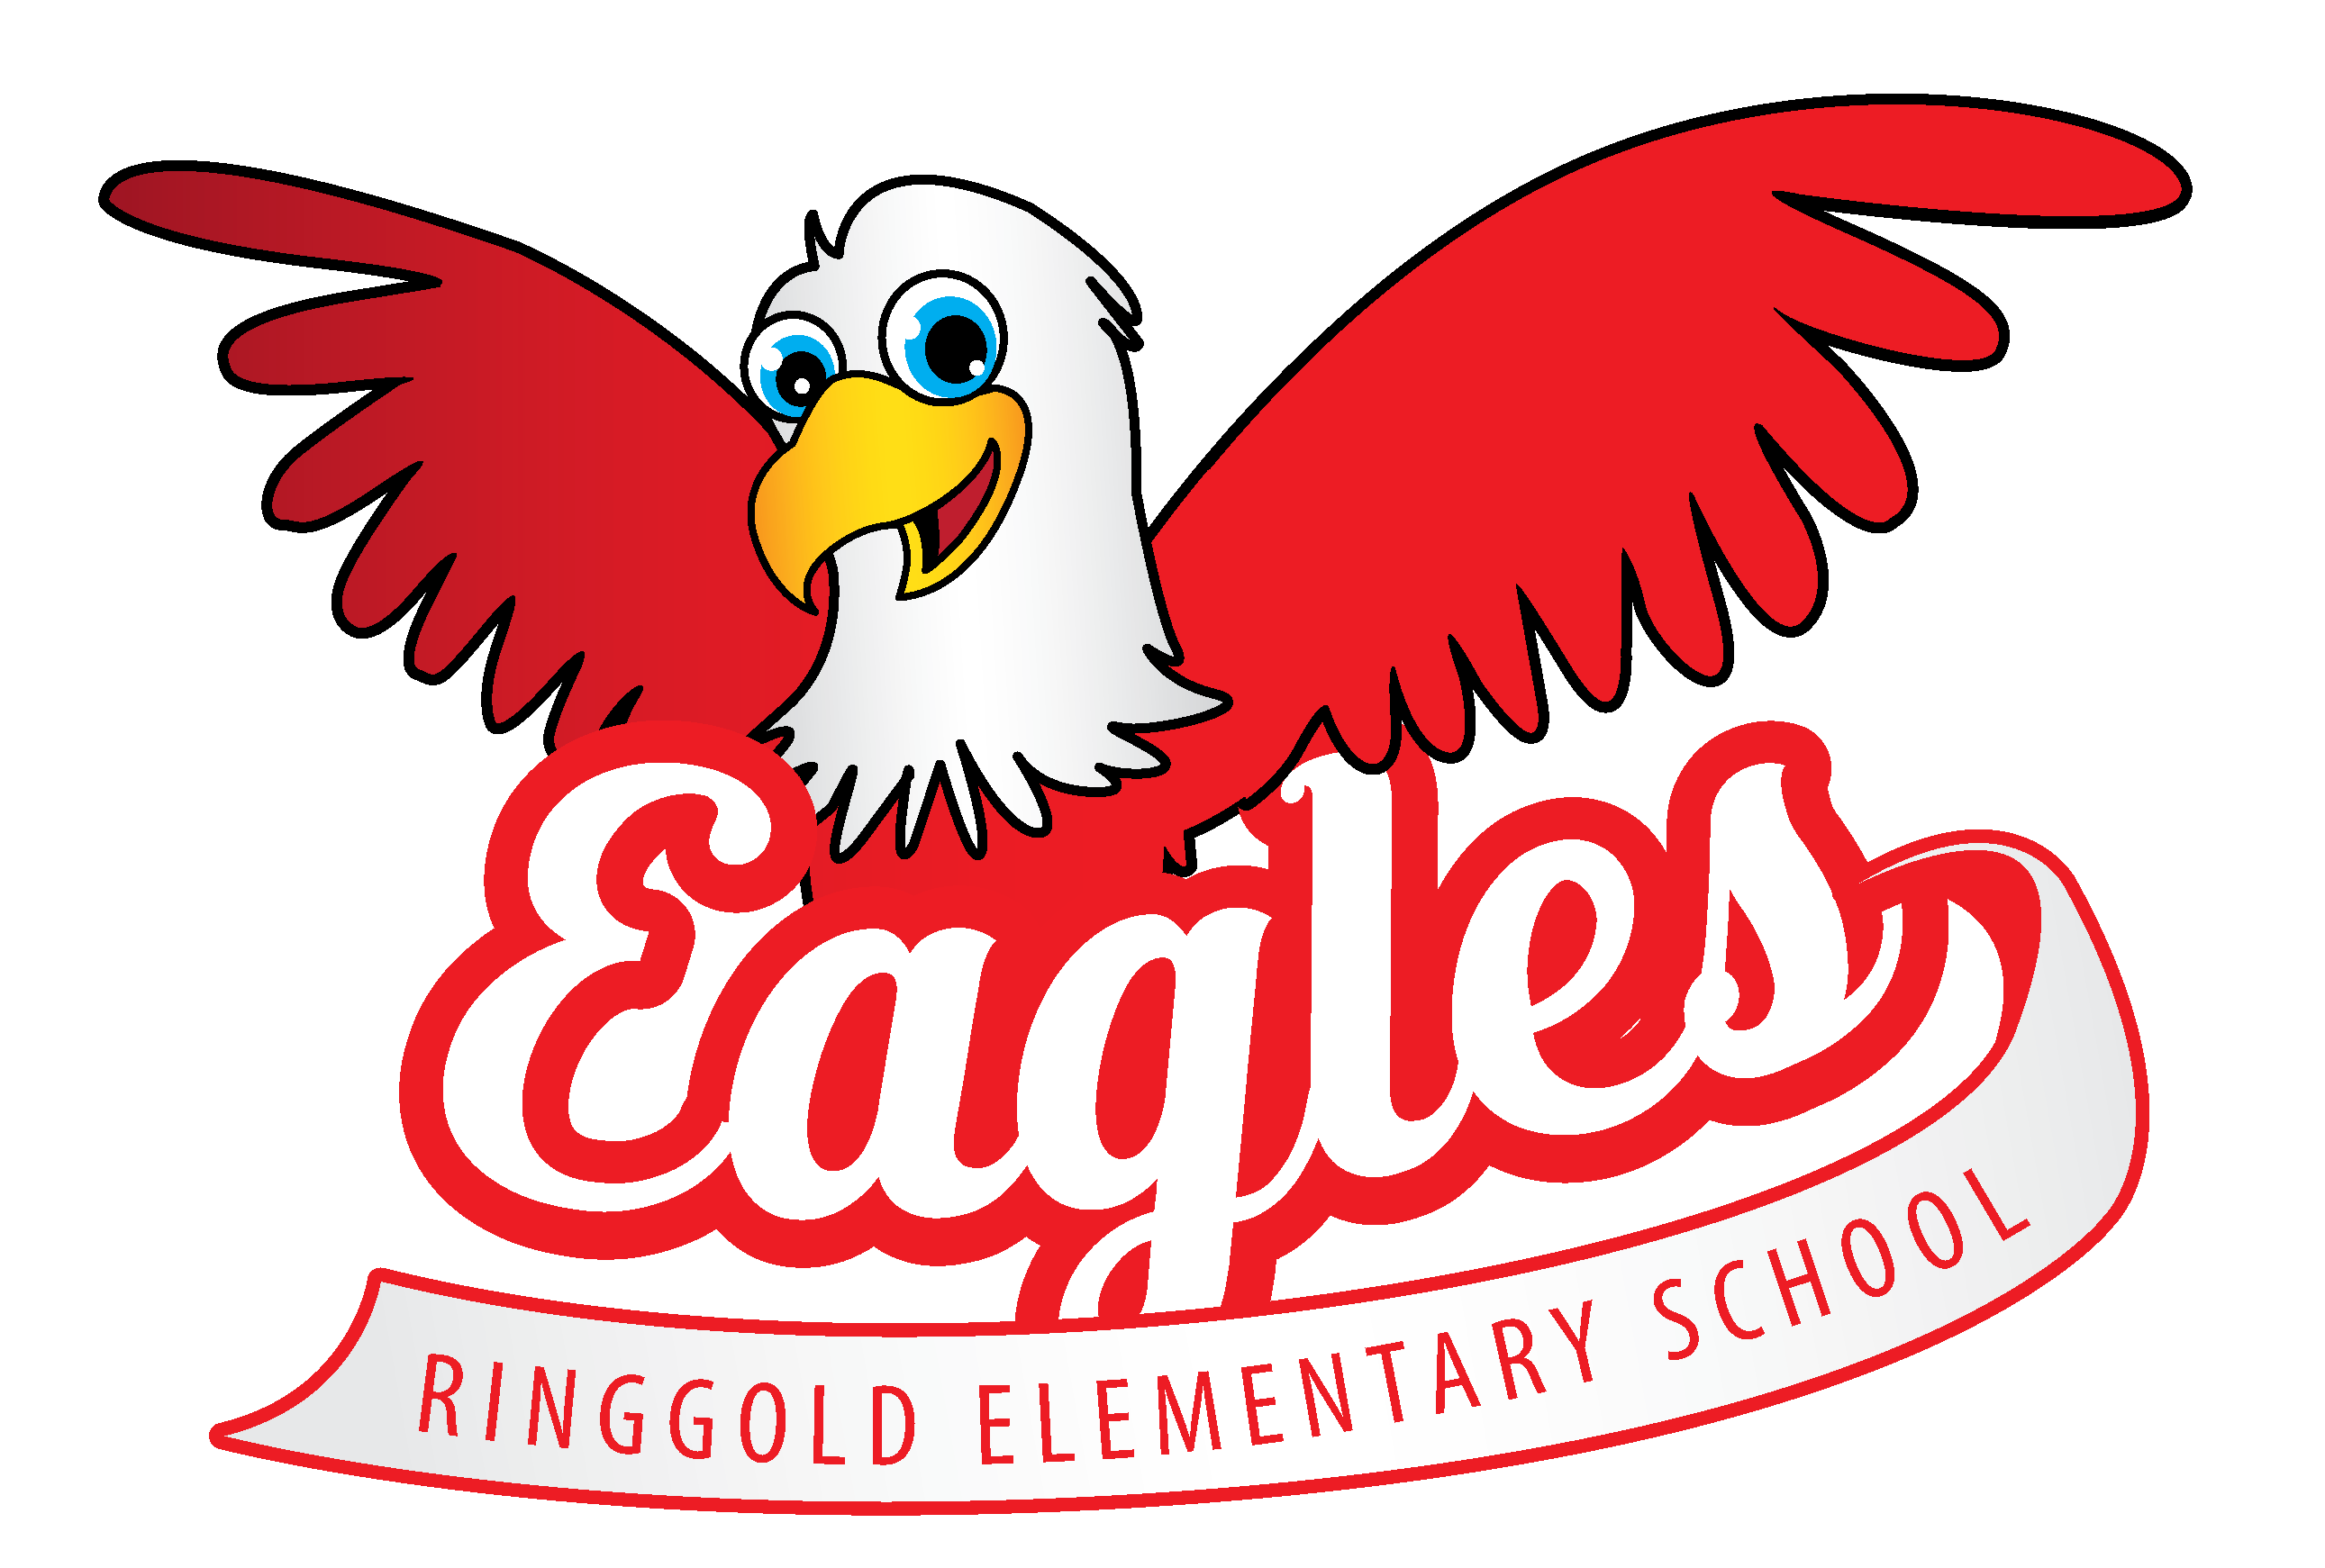 ringgold elementary school logo